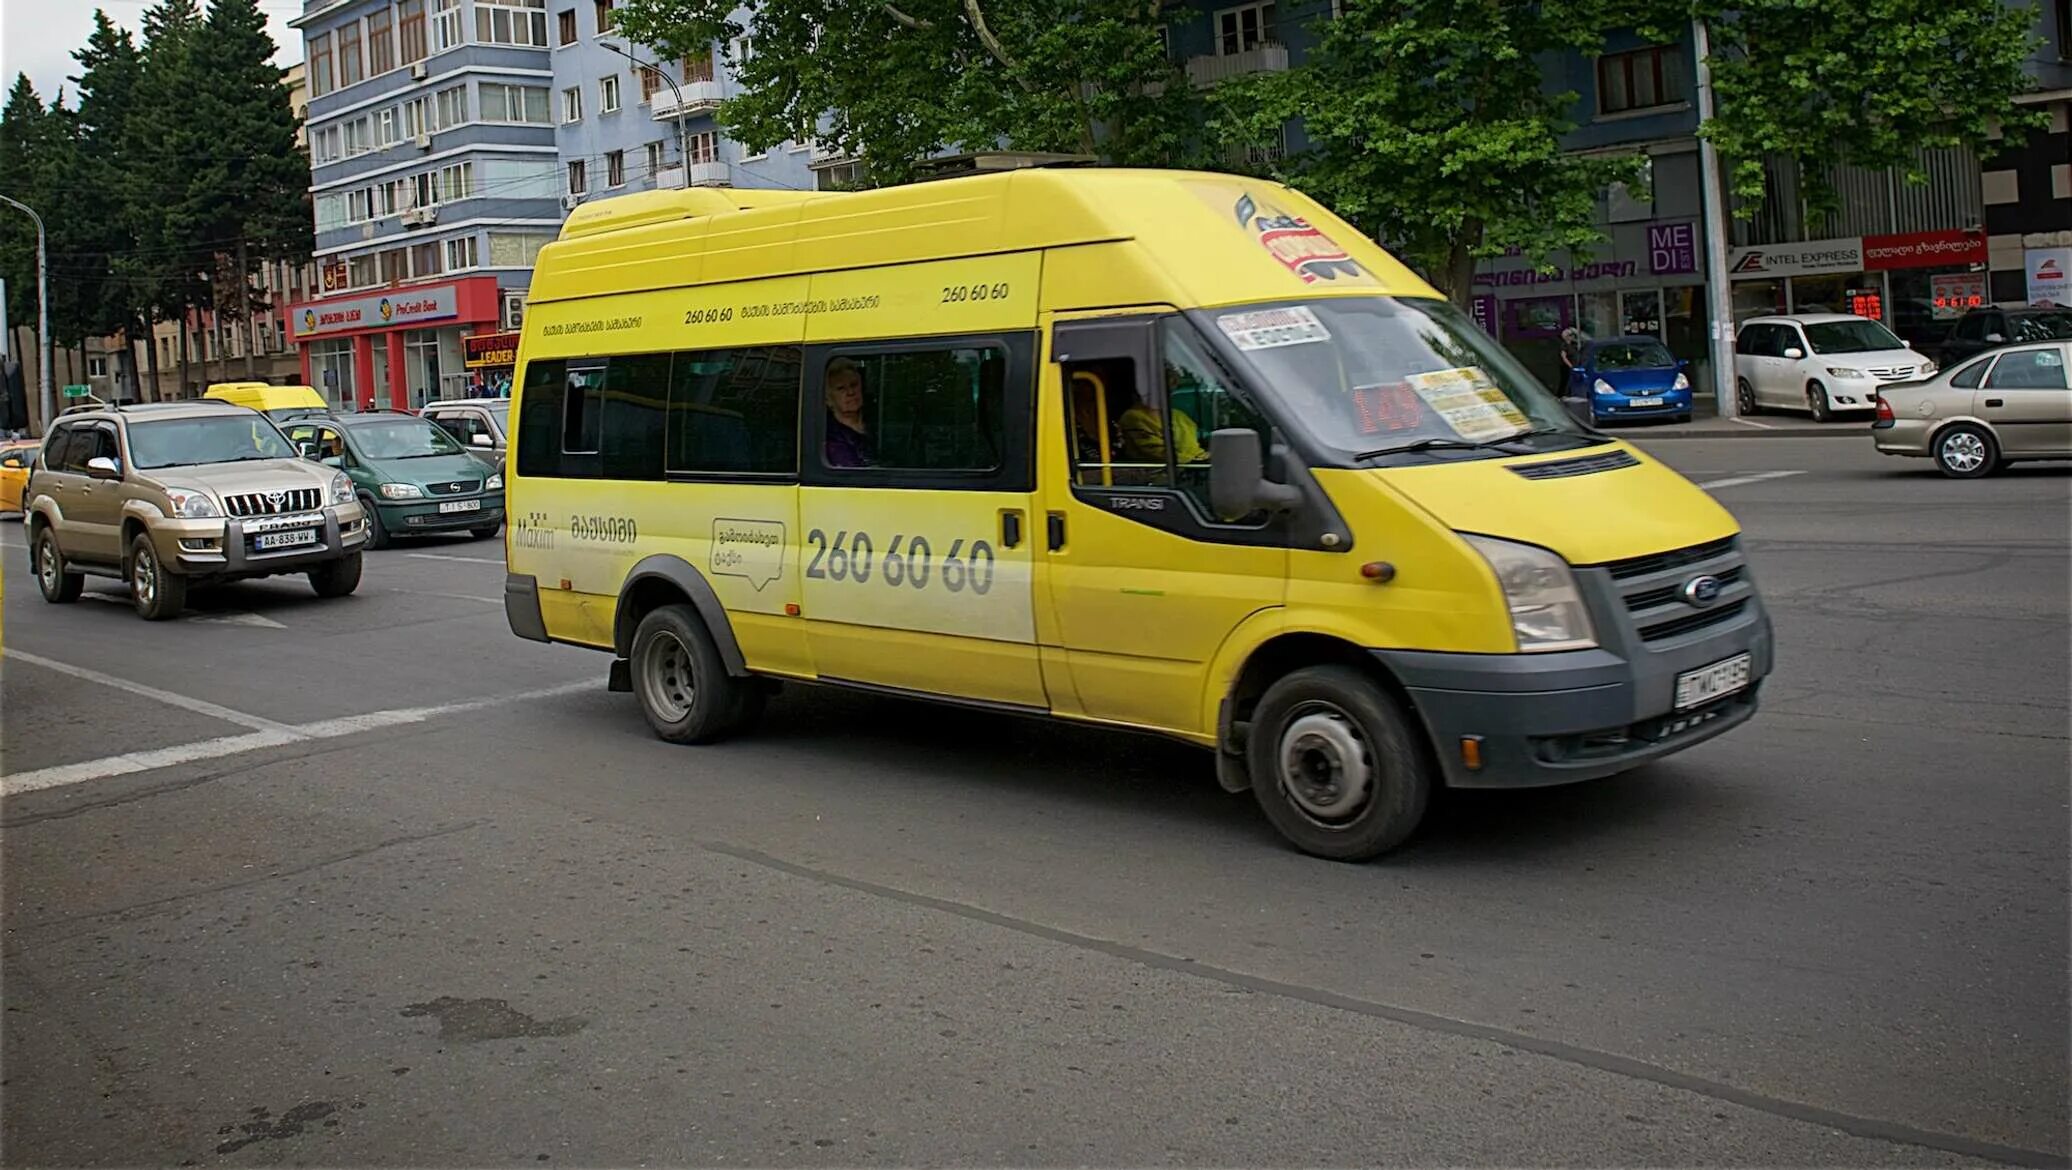 Найти маршрутное такси. Маршрутное такси. Микроавтобус маршрутное такси. Маршрутка такси. Такси микроавтобус.